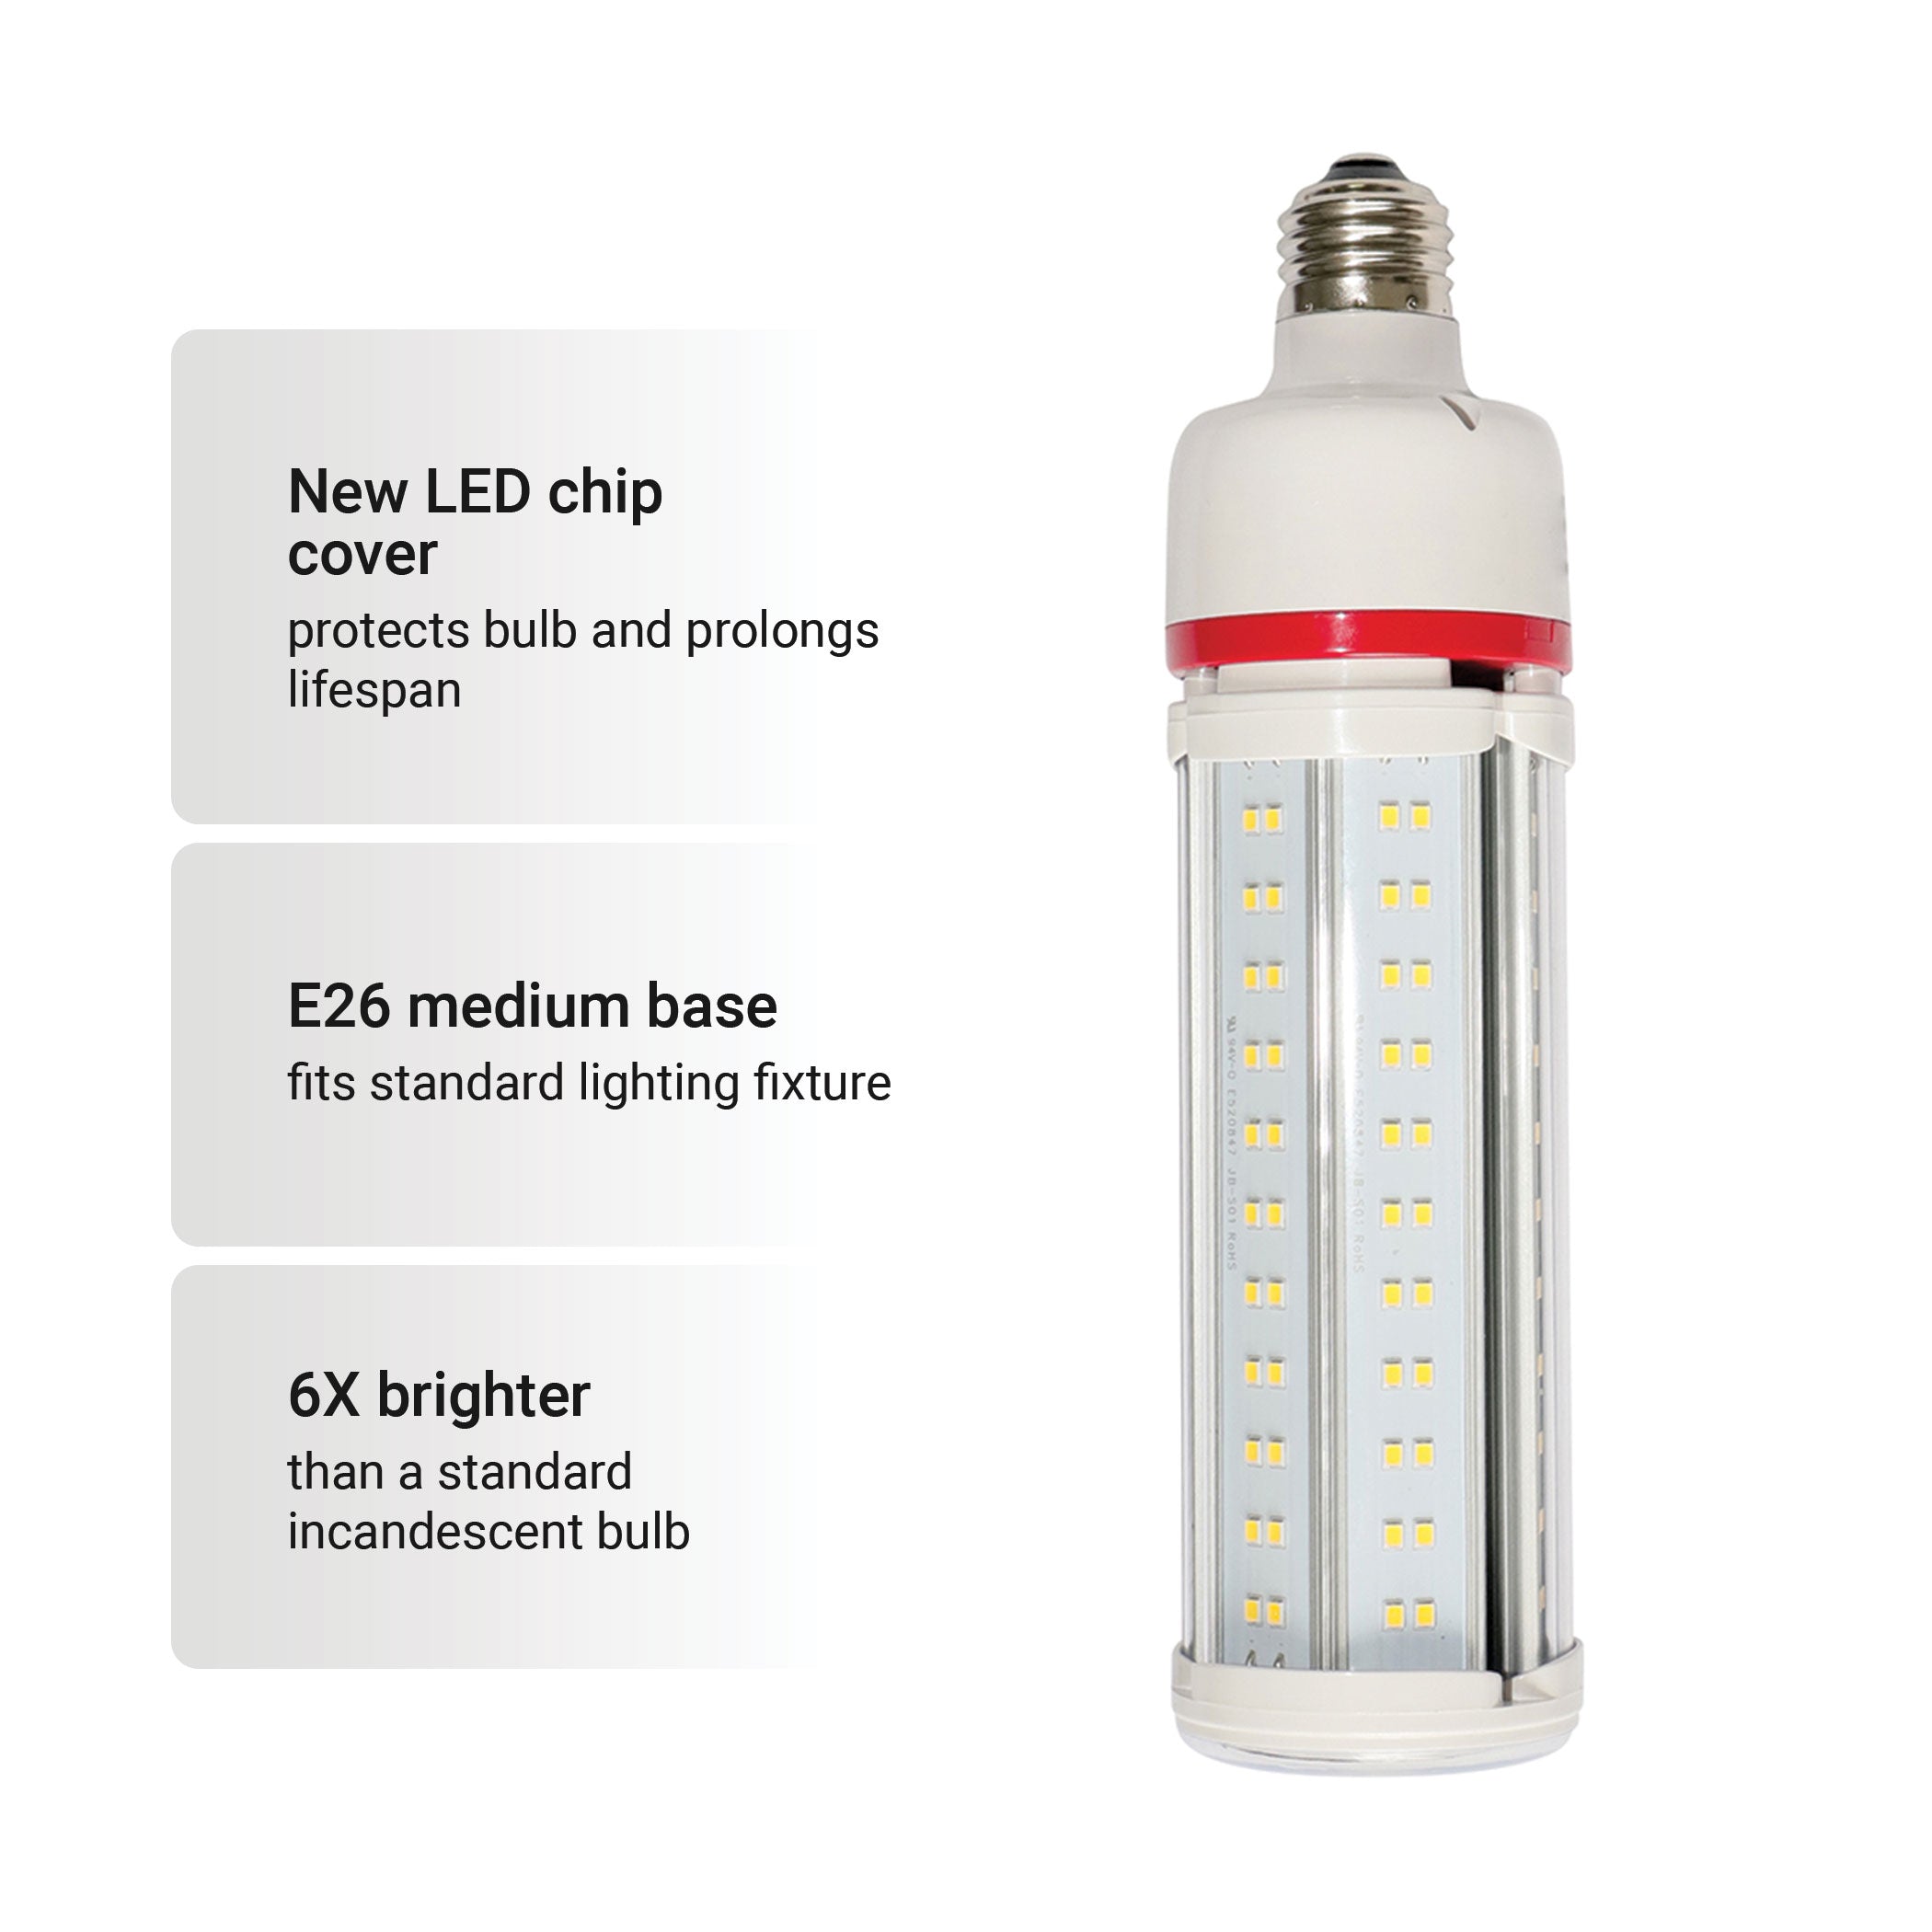 6975 Lumen, Damp Rated LED Corn Cob Bulb, 45-Watt, 350-Watt Equivalent, 5000K Daylight, E26